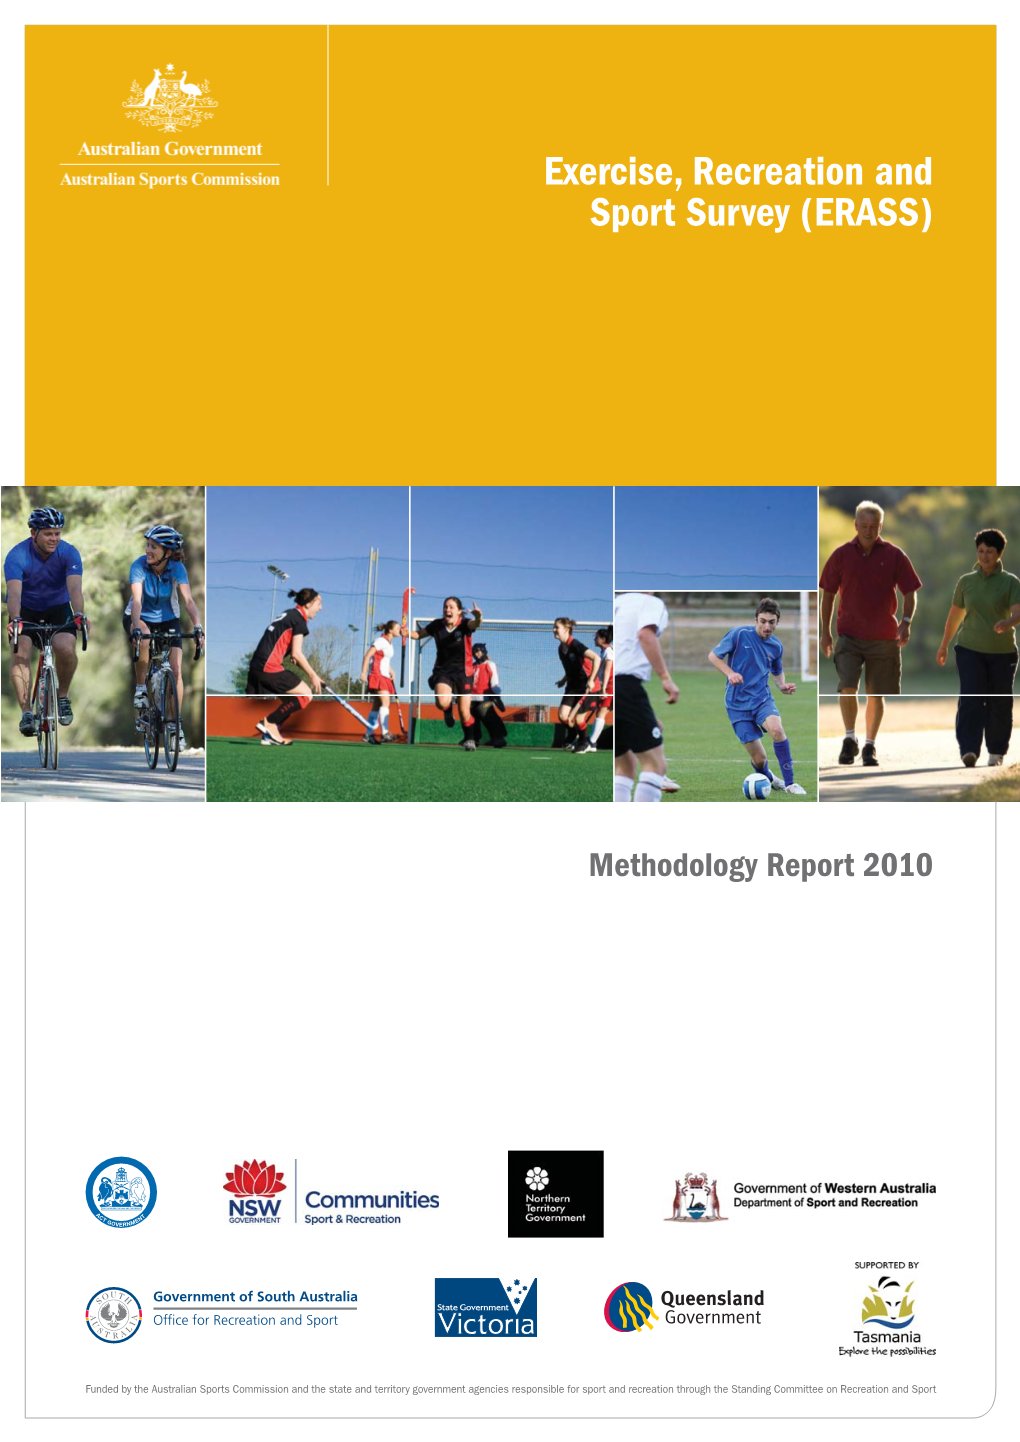 ERASS 2010 Methodology Report